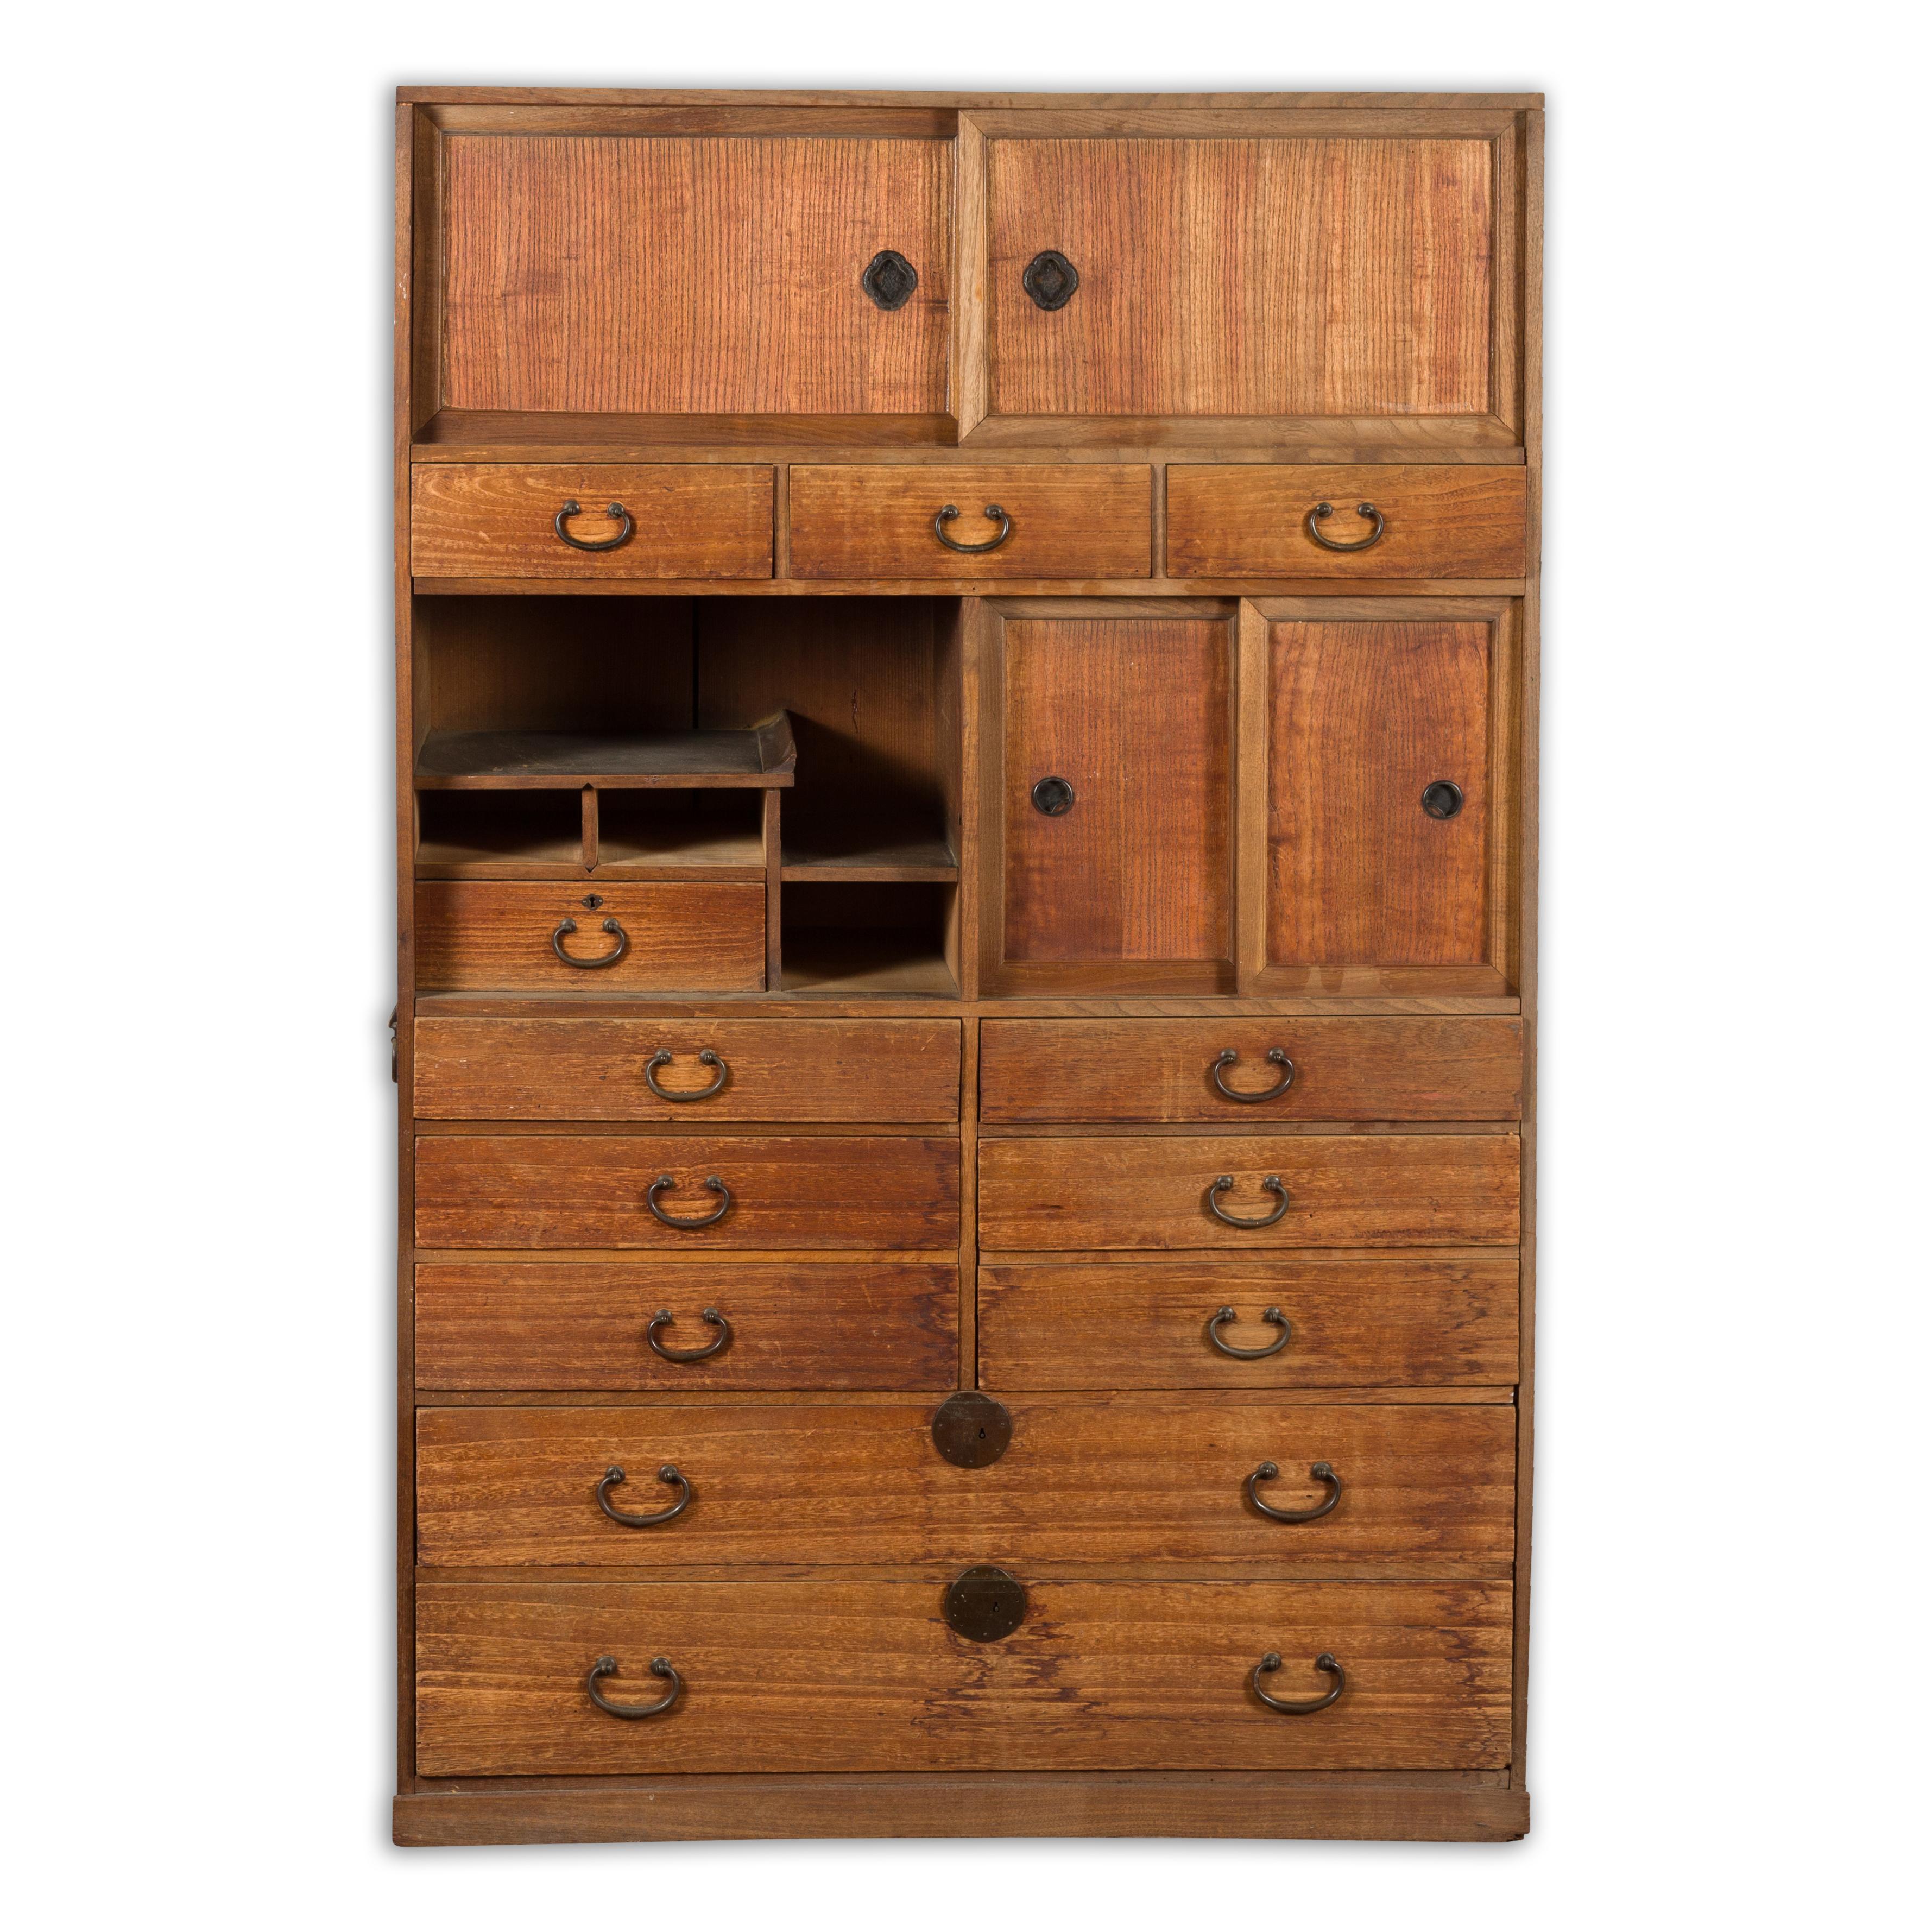 Japanese Meiji 19th Century Cha Tansu Kiri Wood Tea Cabinet with Doors, Drawers For Sale 7